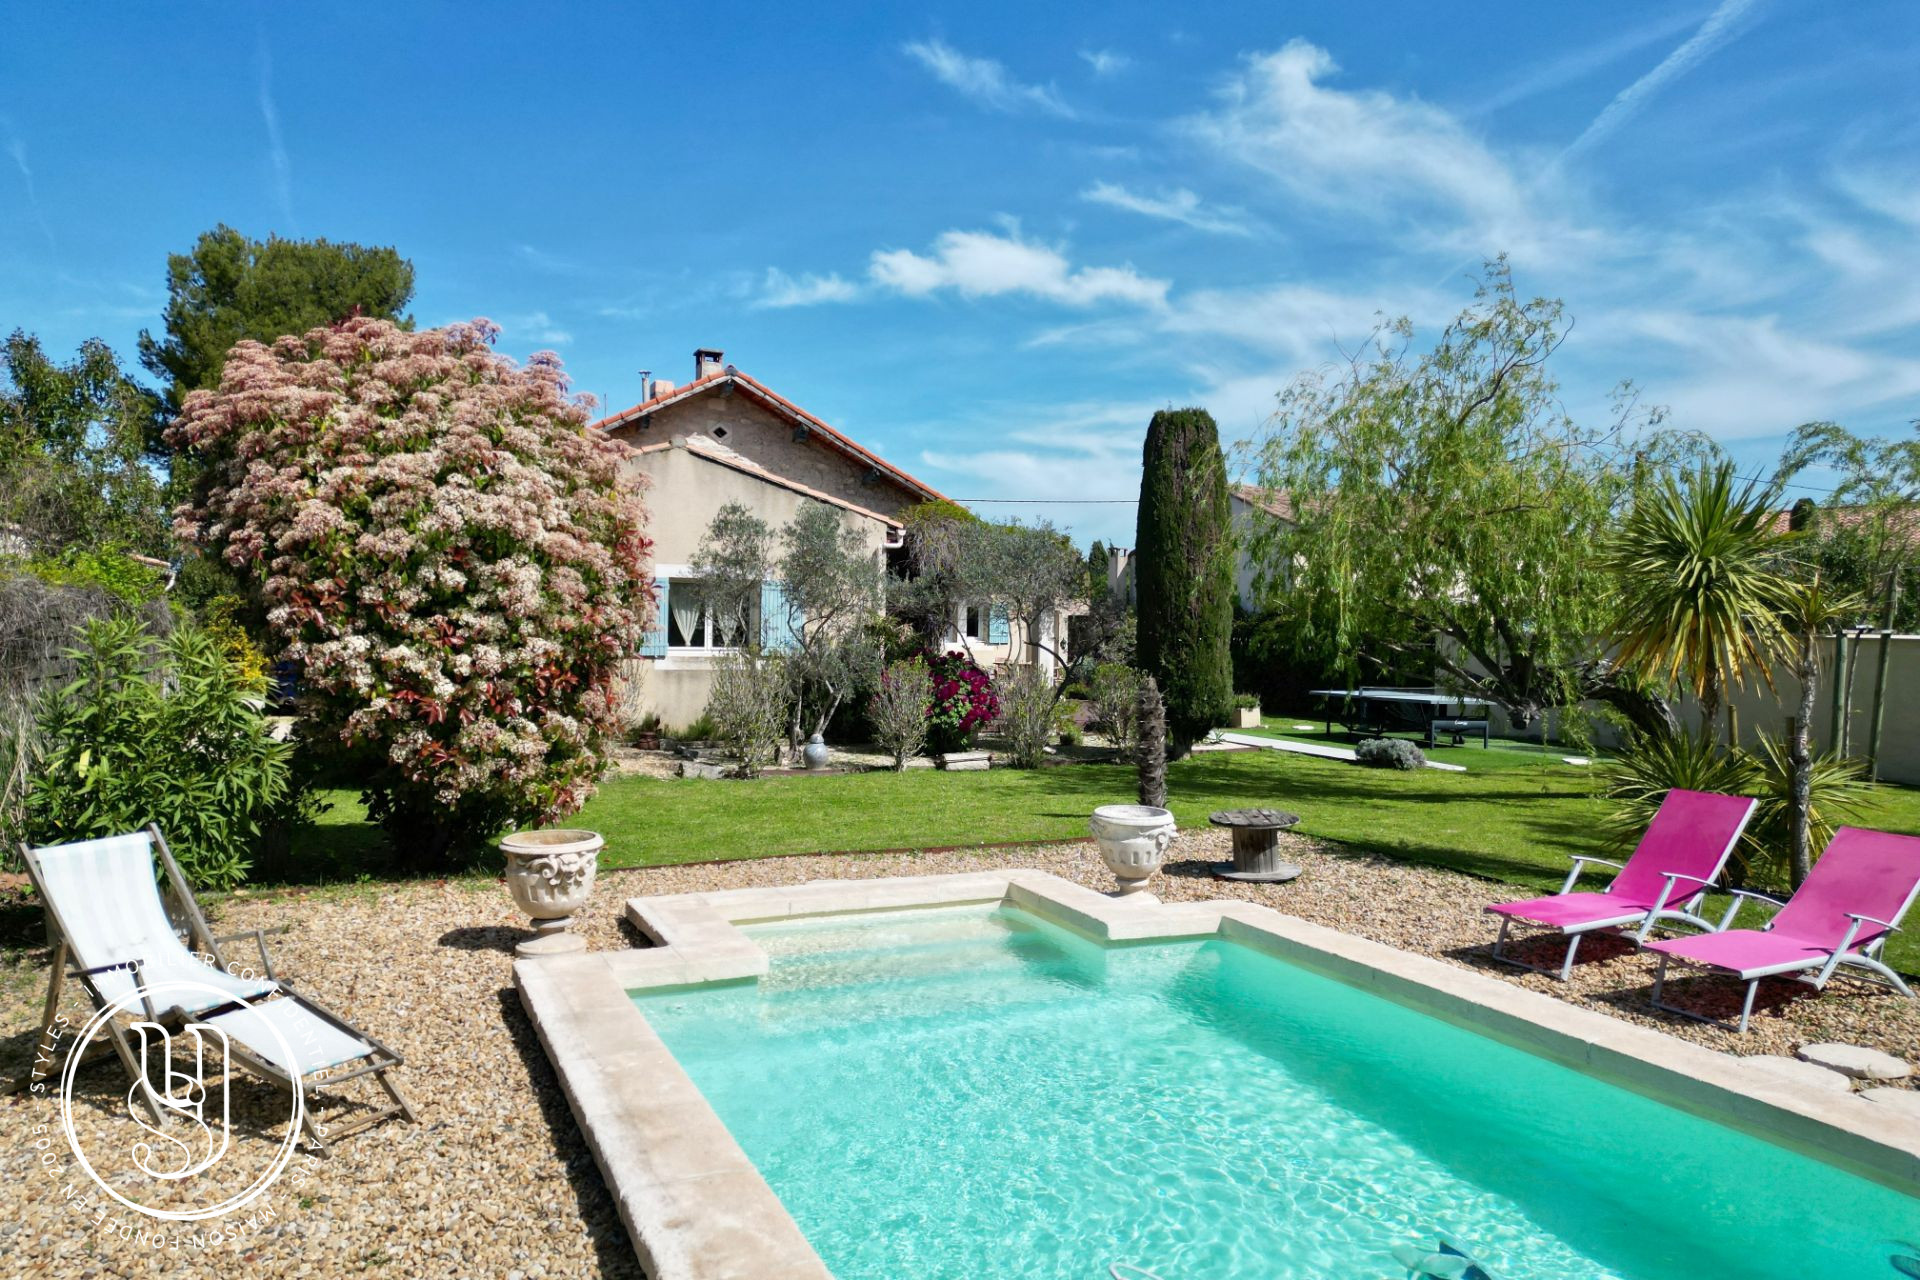 Saint-Rémy-de-Provence - centre on foot, a superb 50s house with its garden - image 2